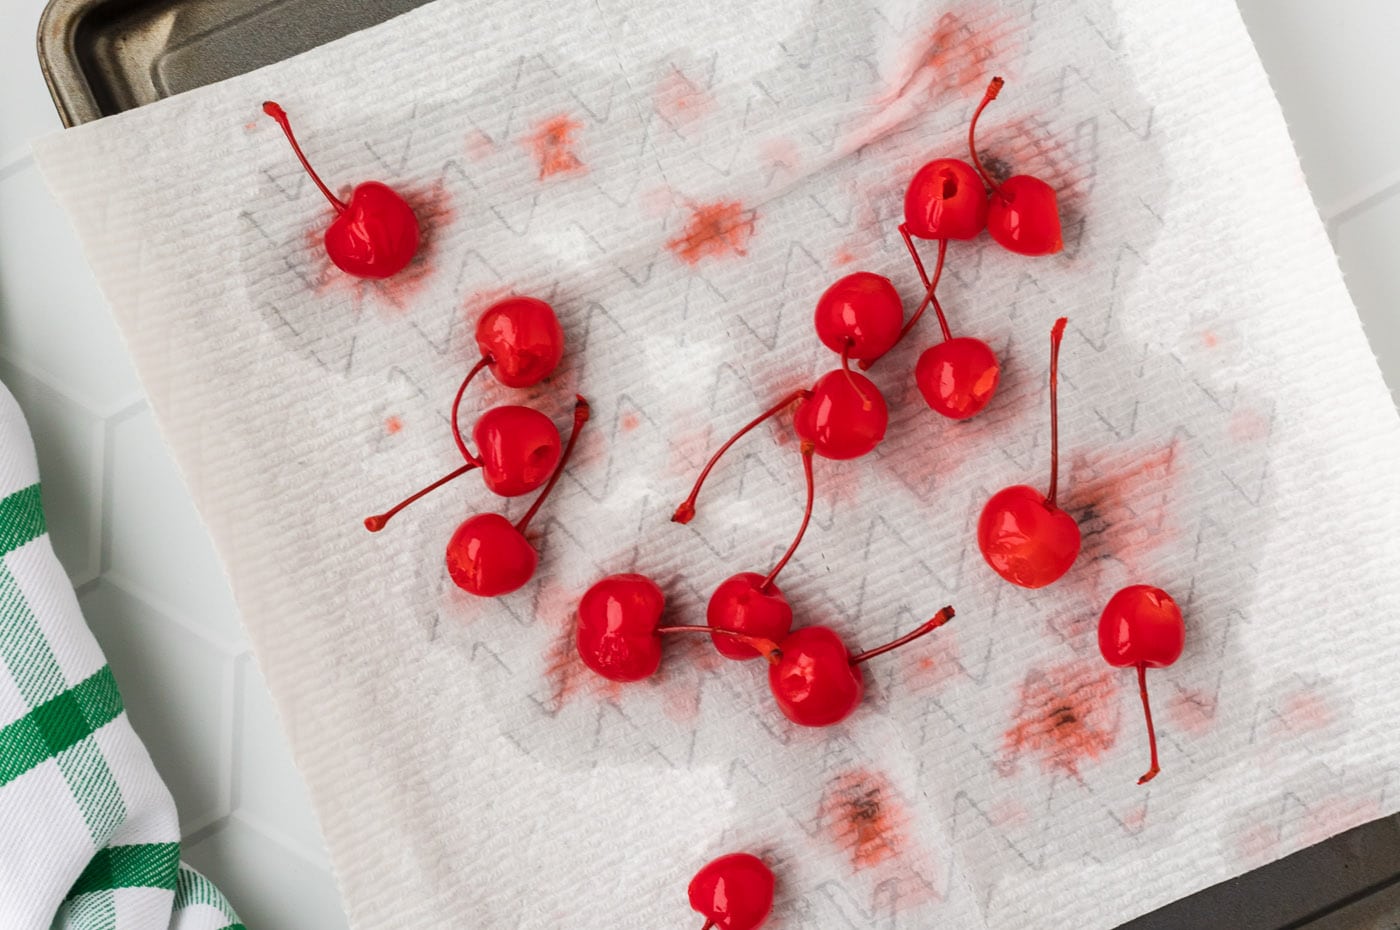 vodka cherries on paper towel